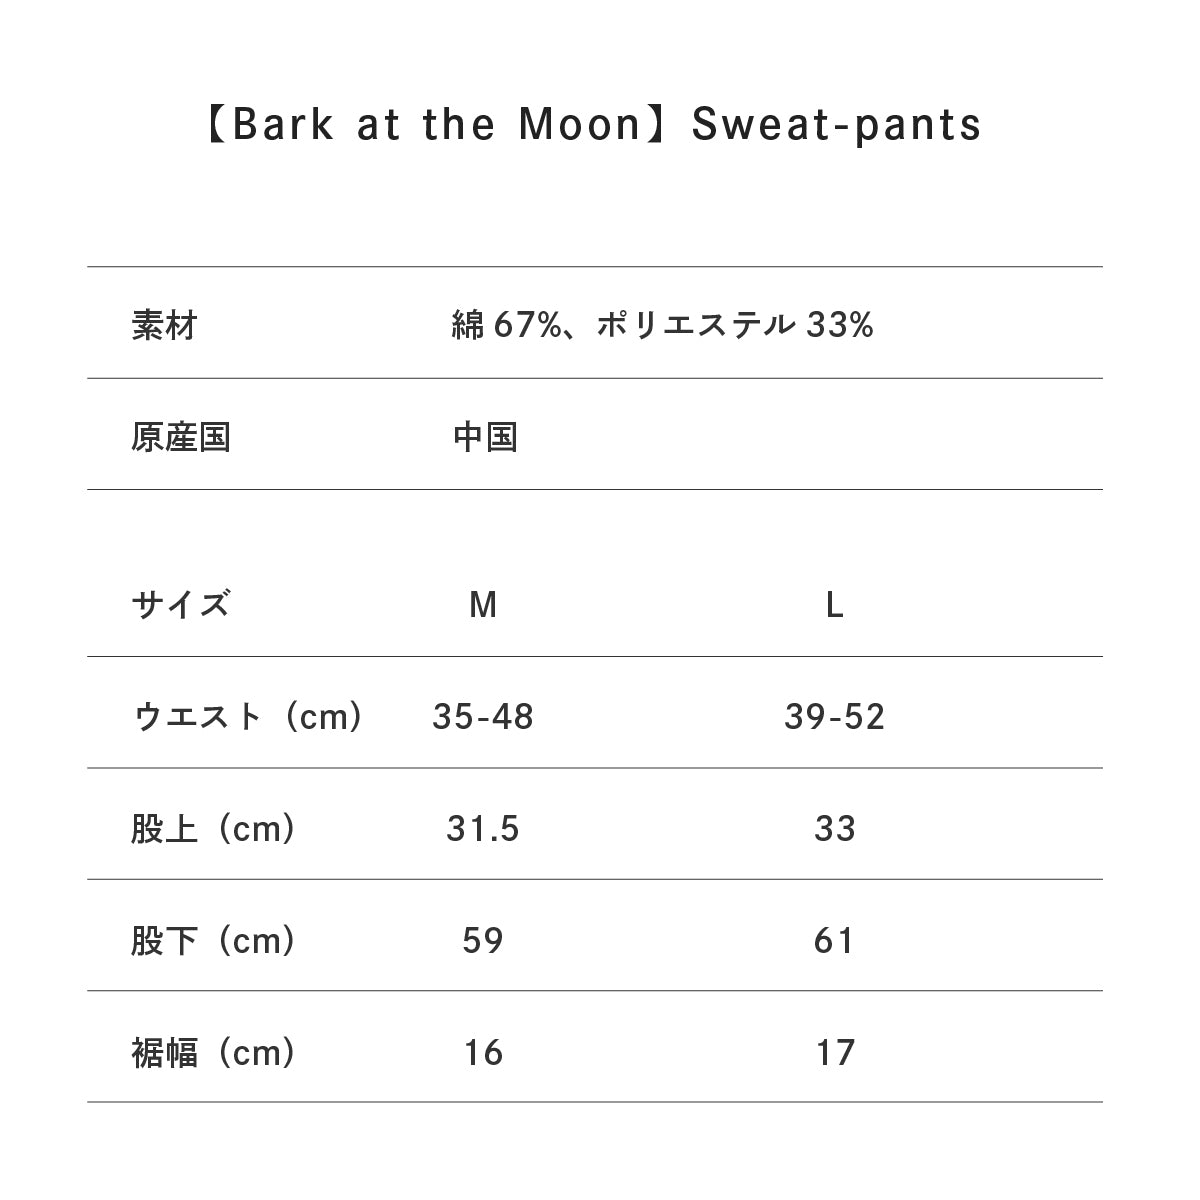 Sweat-pants